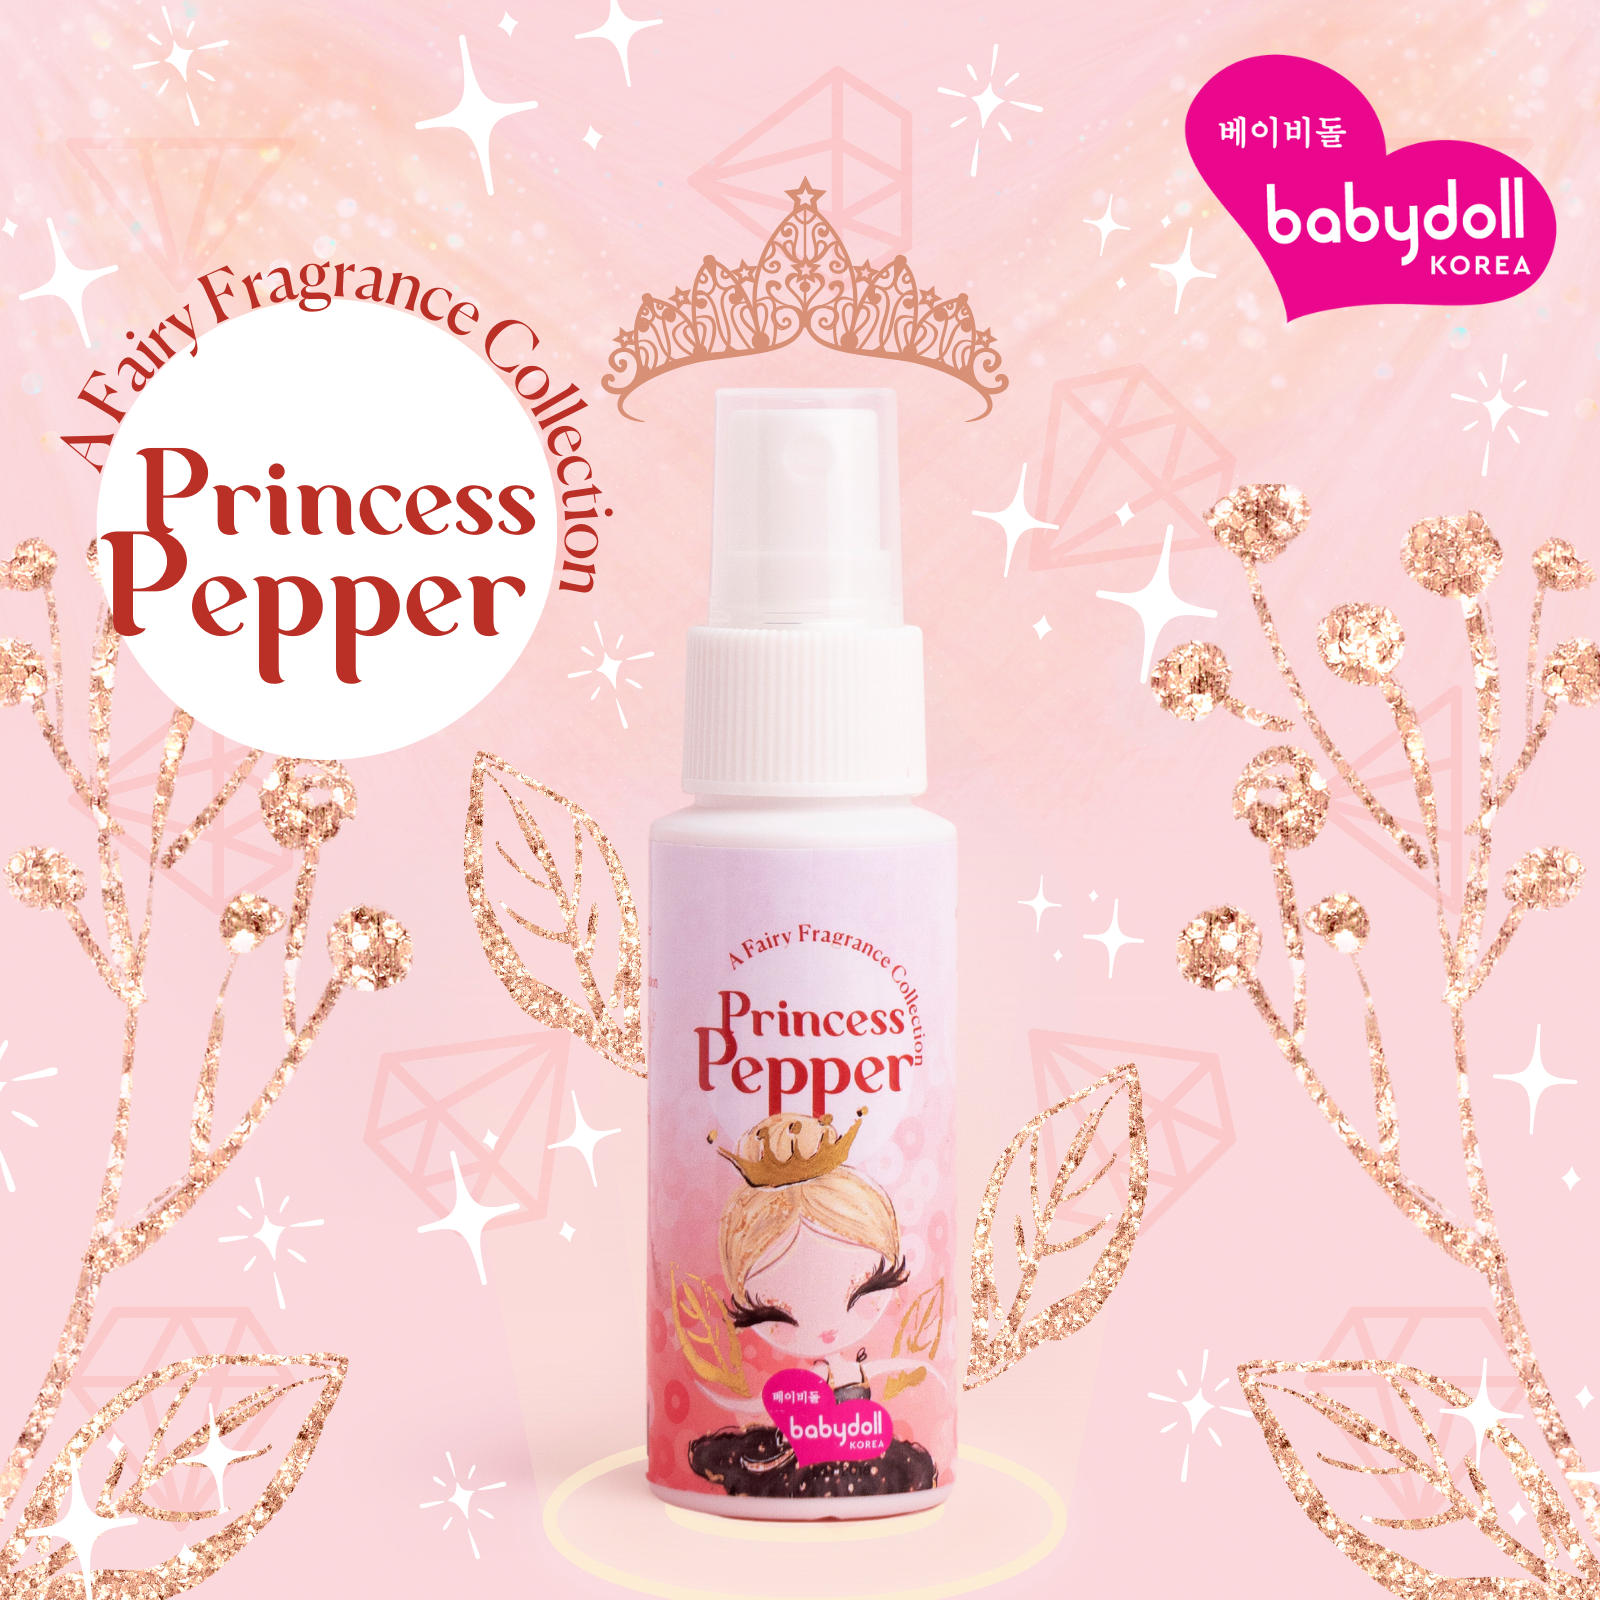 Babydoll Eau De Parfum in Princess Pepper 60ml